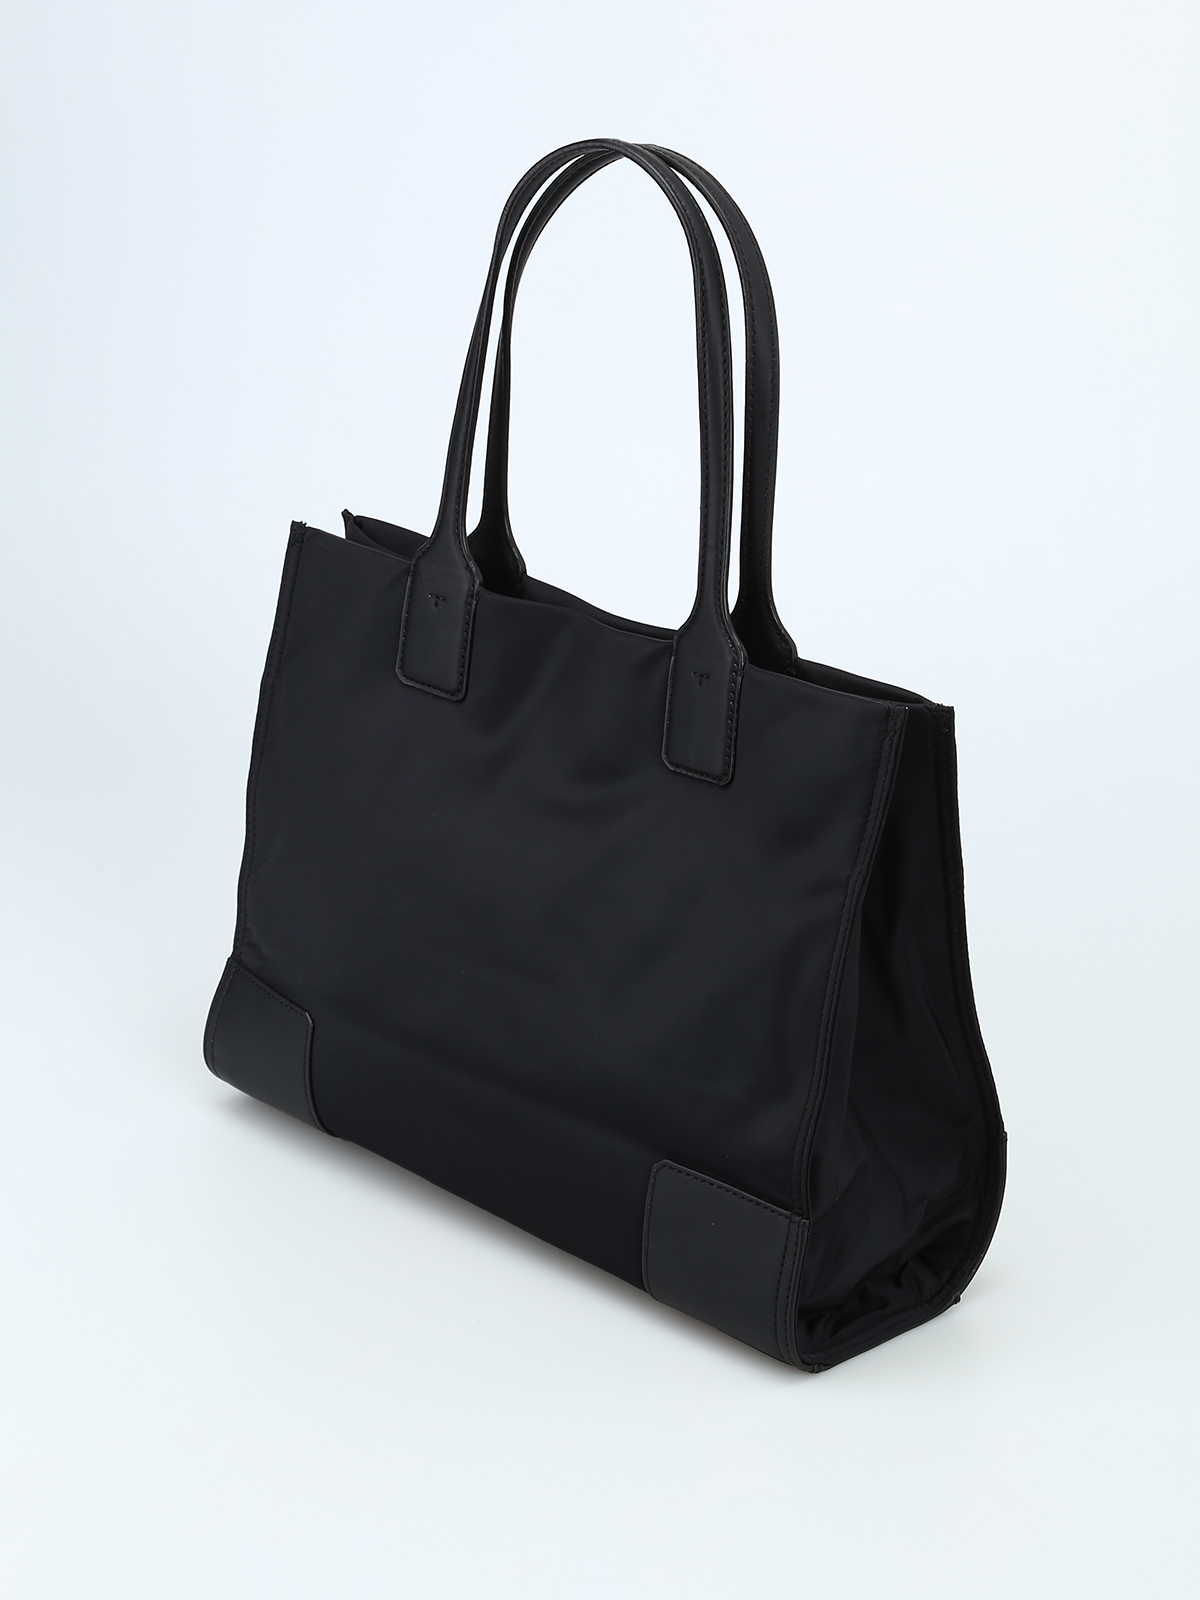 Totes bags Tory Burch - Ella Mini black nylon tote - 45211001 